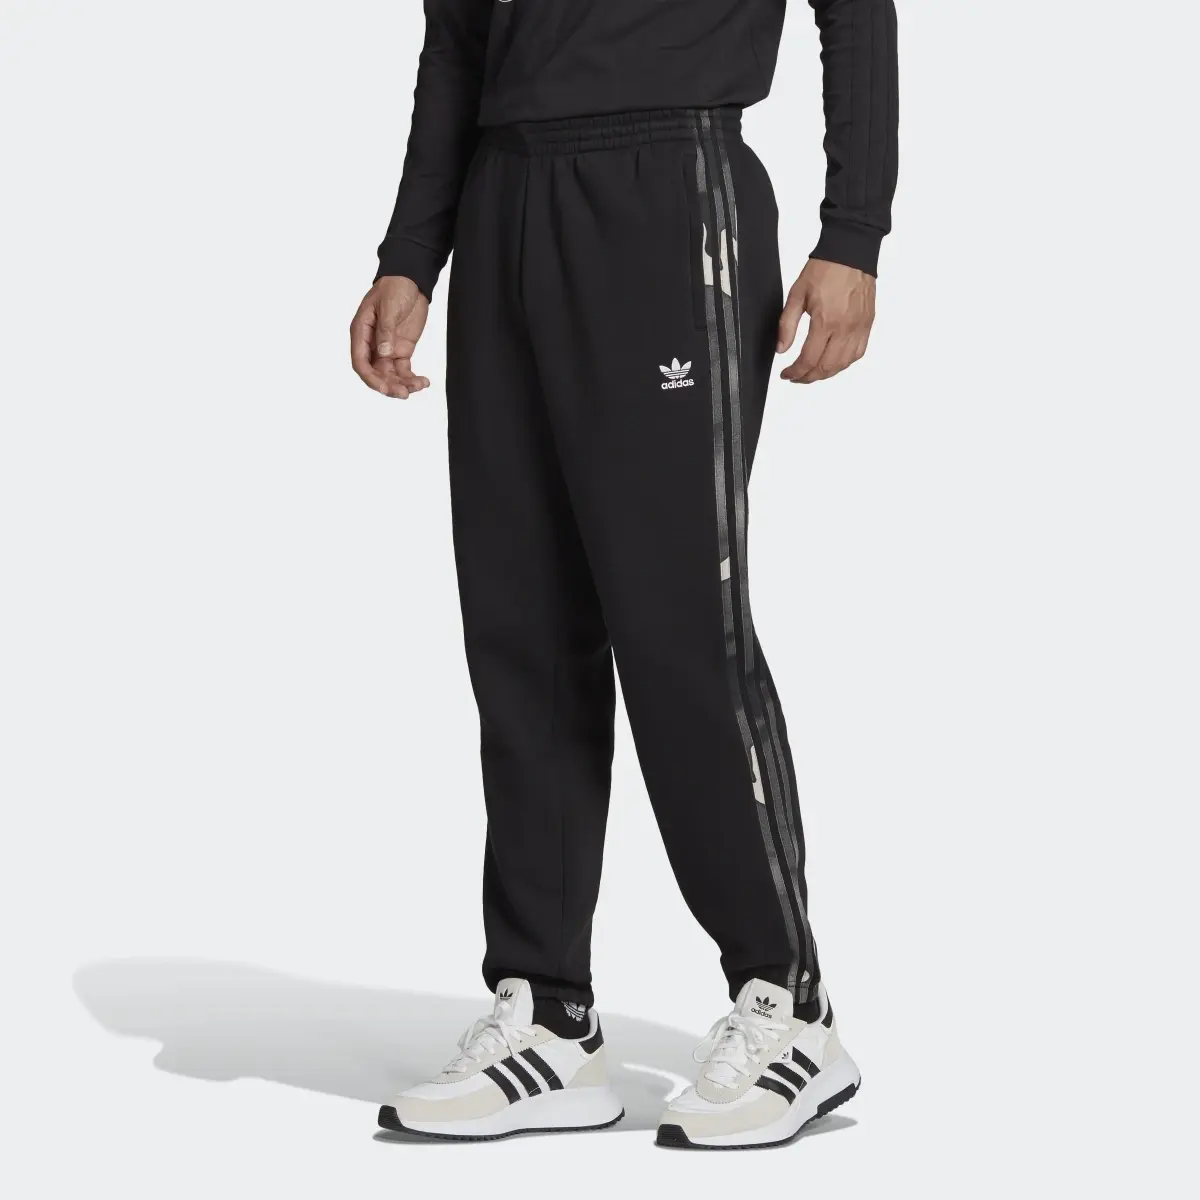 Adidas Graphics Camo Sweat Pants. 1